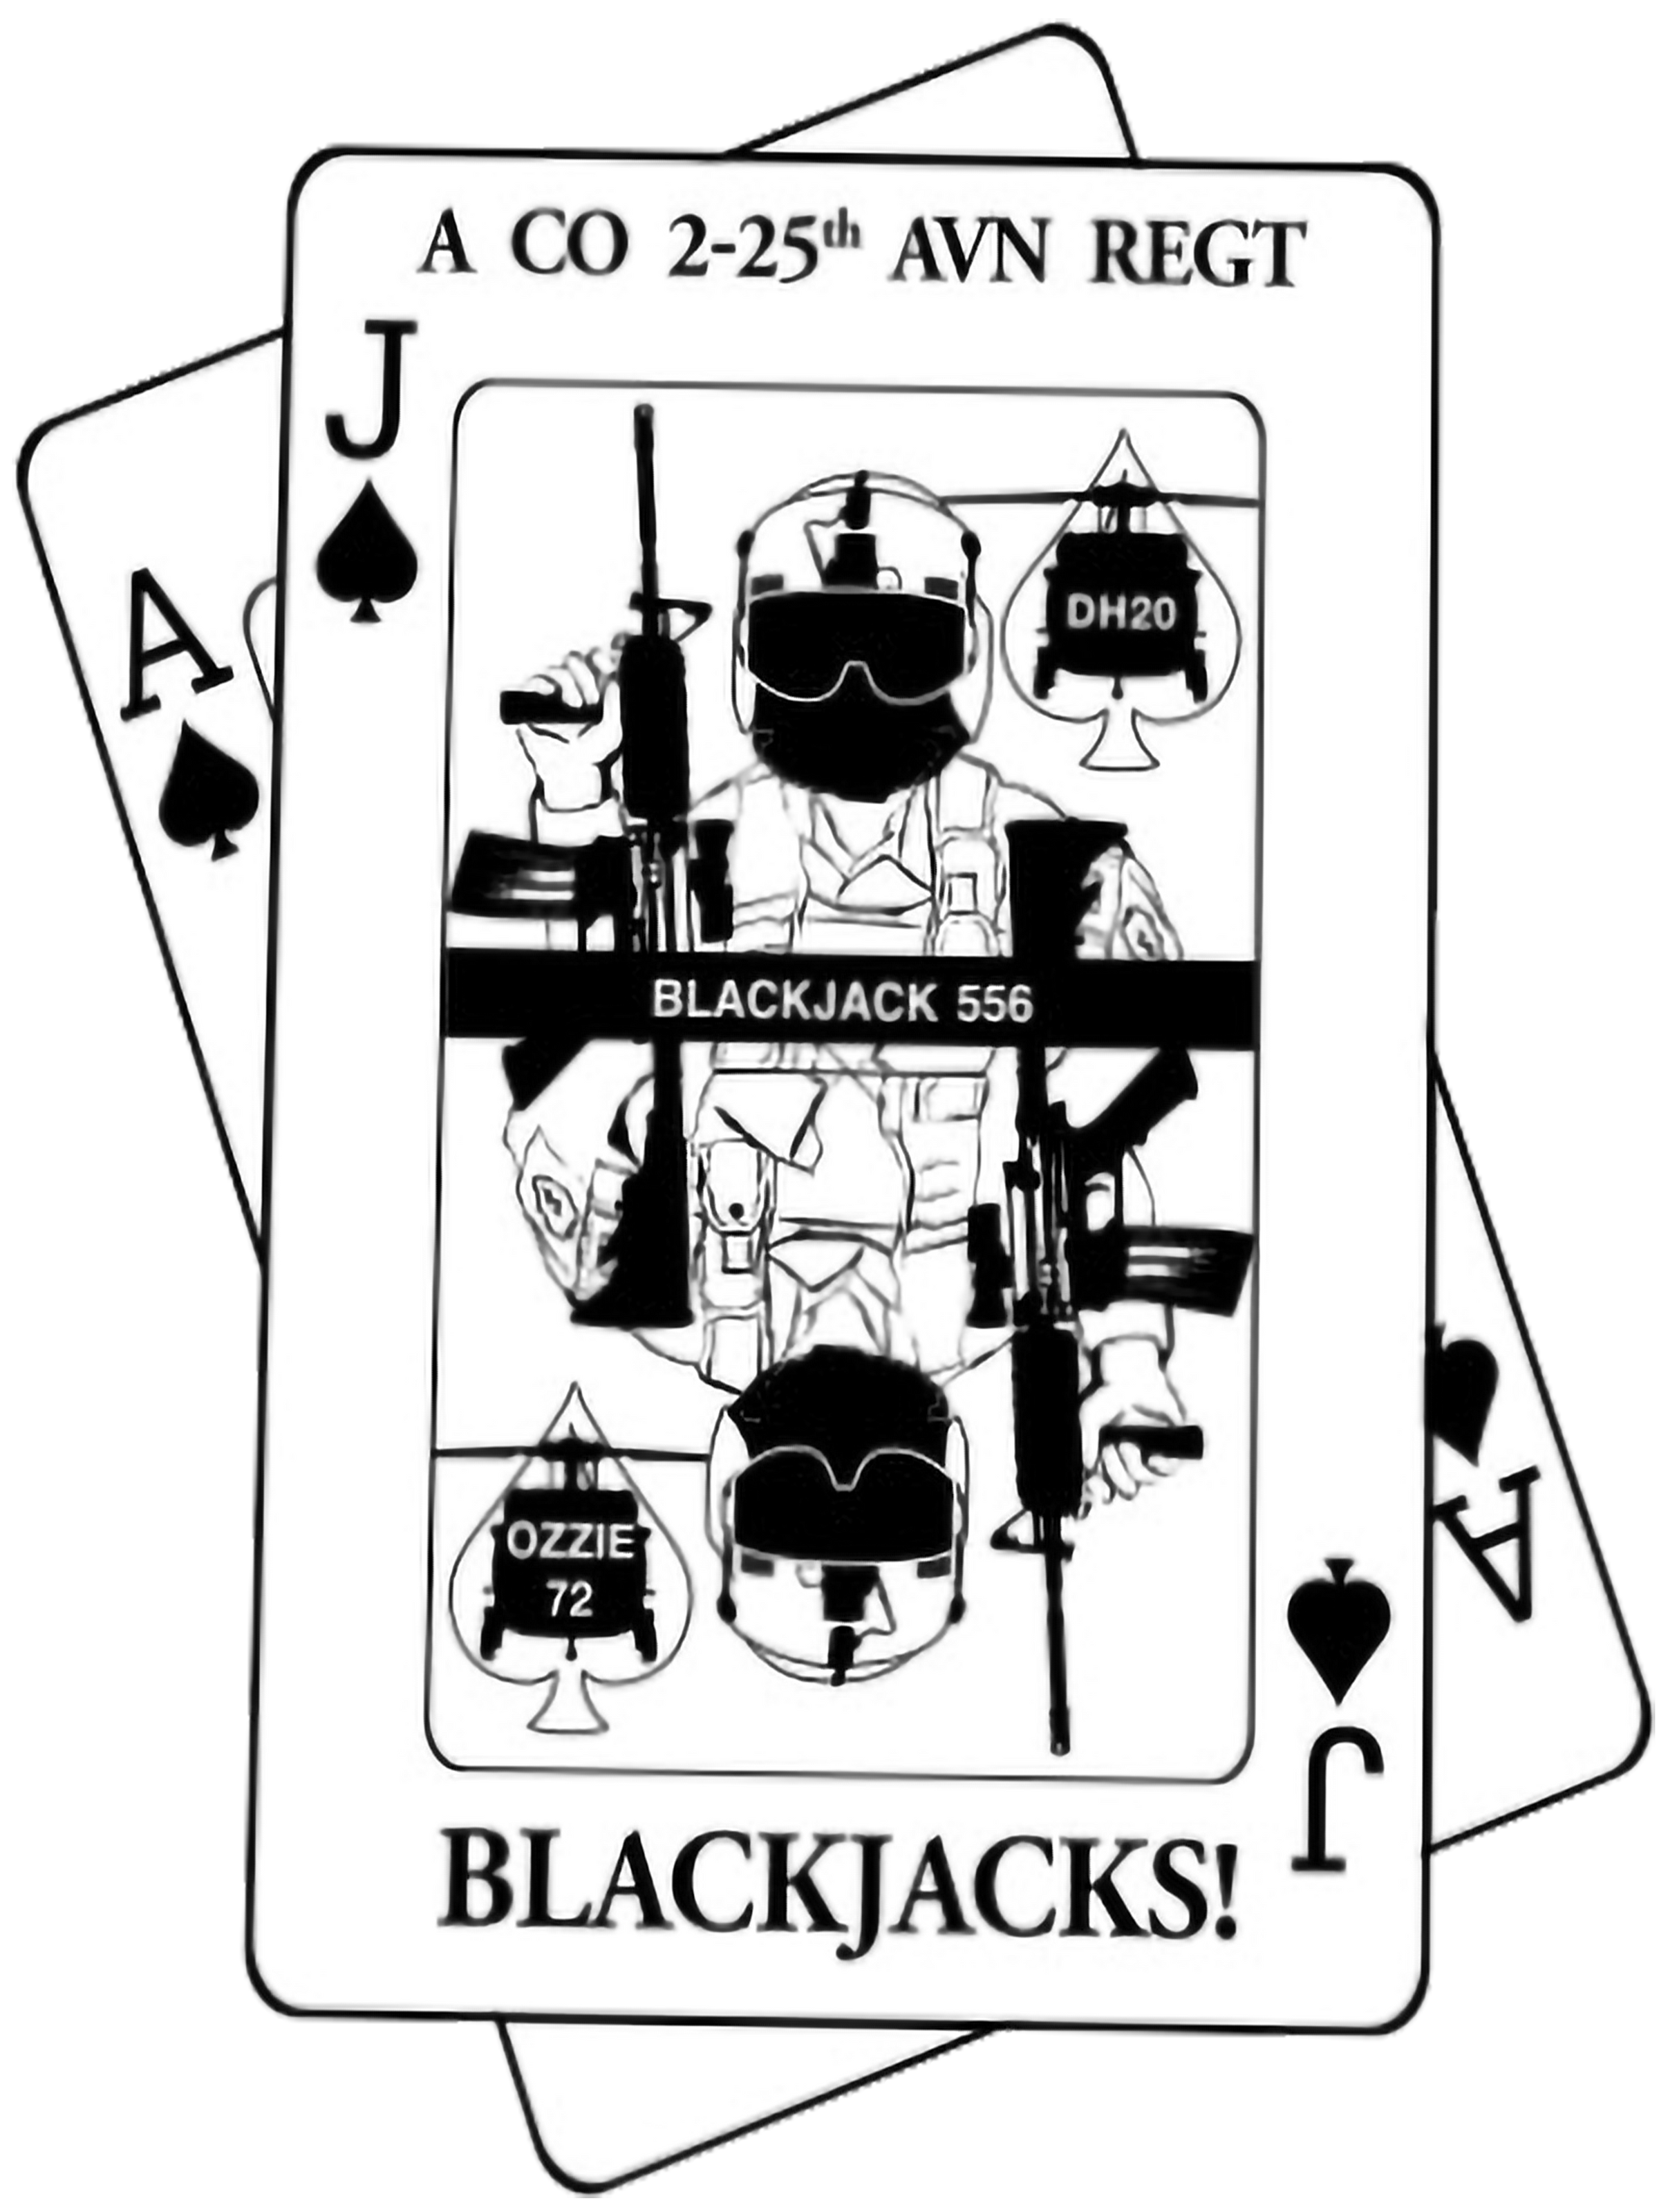 A Co, 2-25 AVN REGT "Blackjacks"